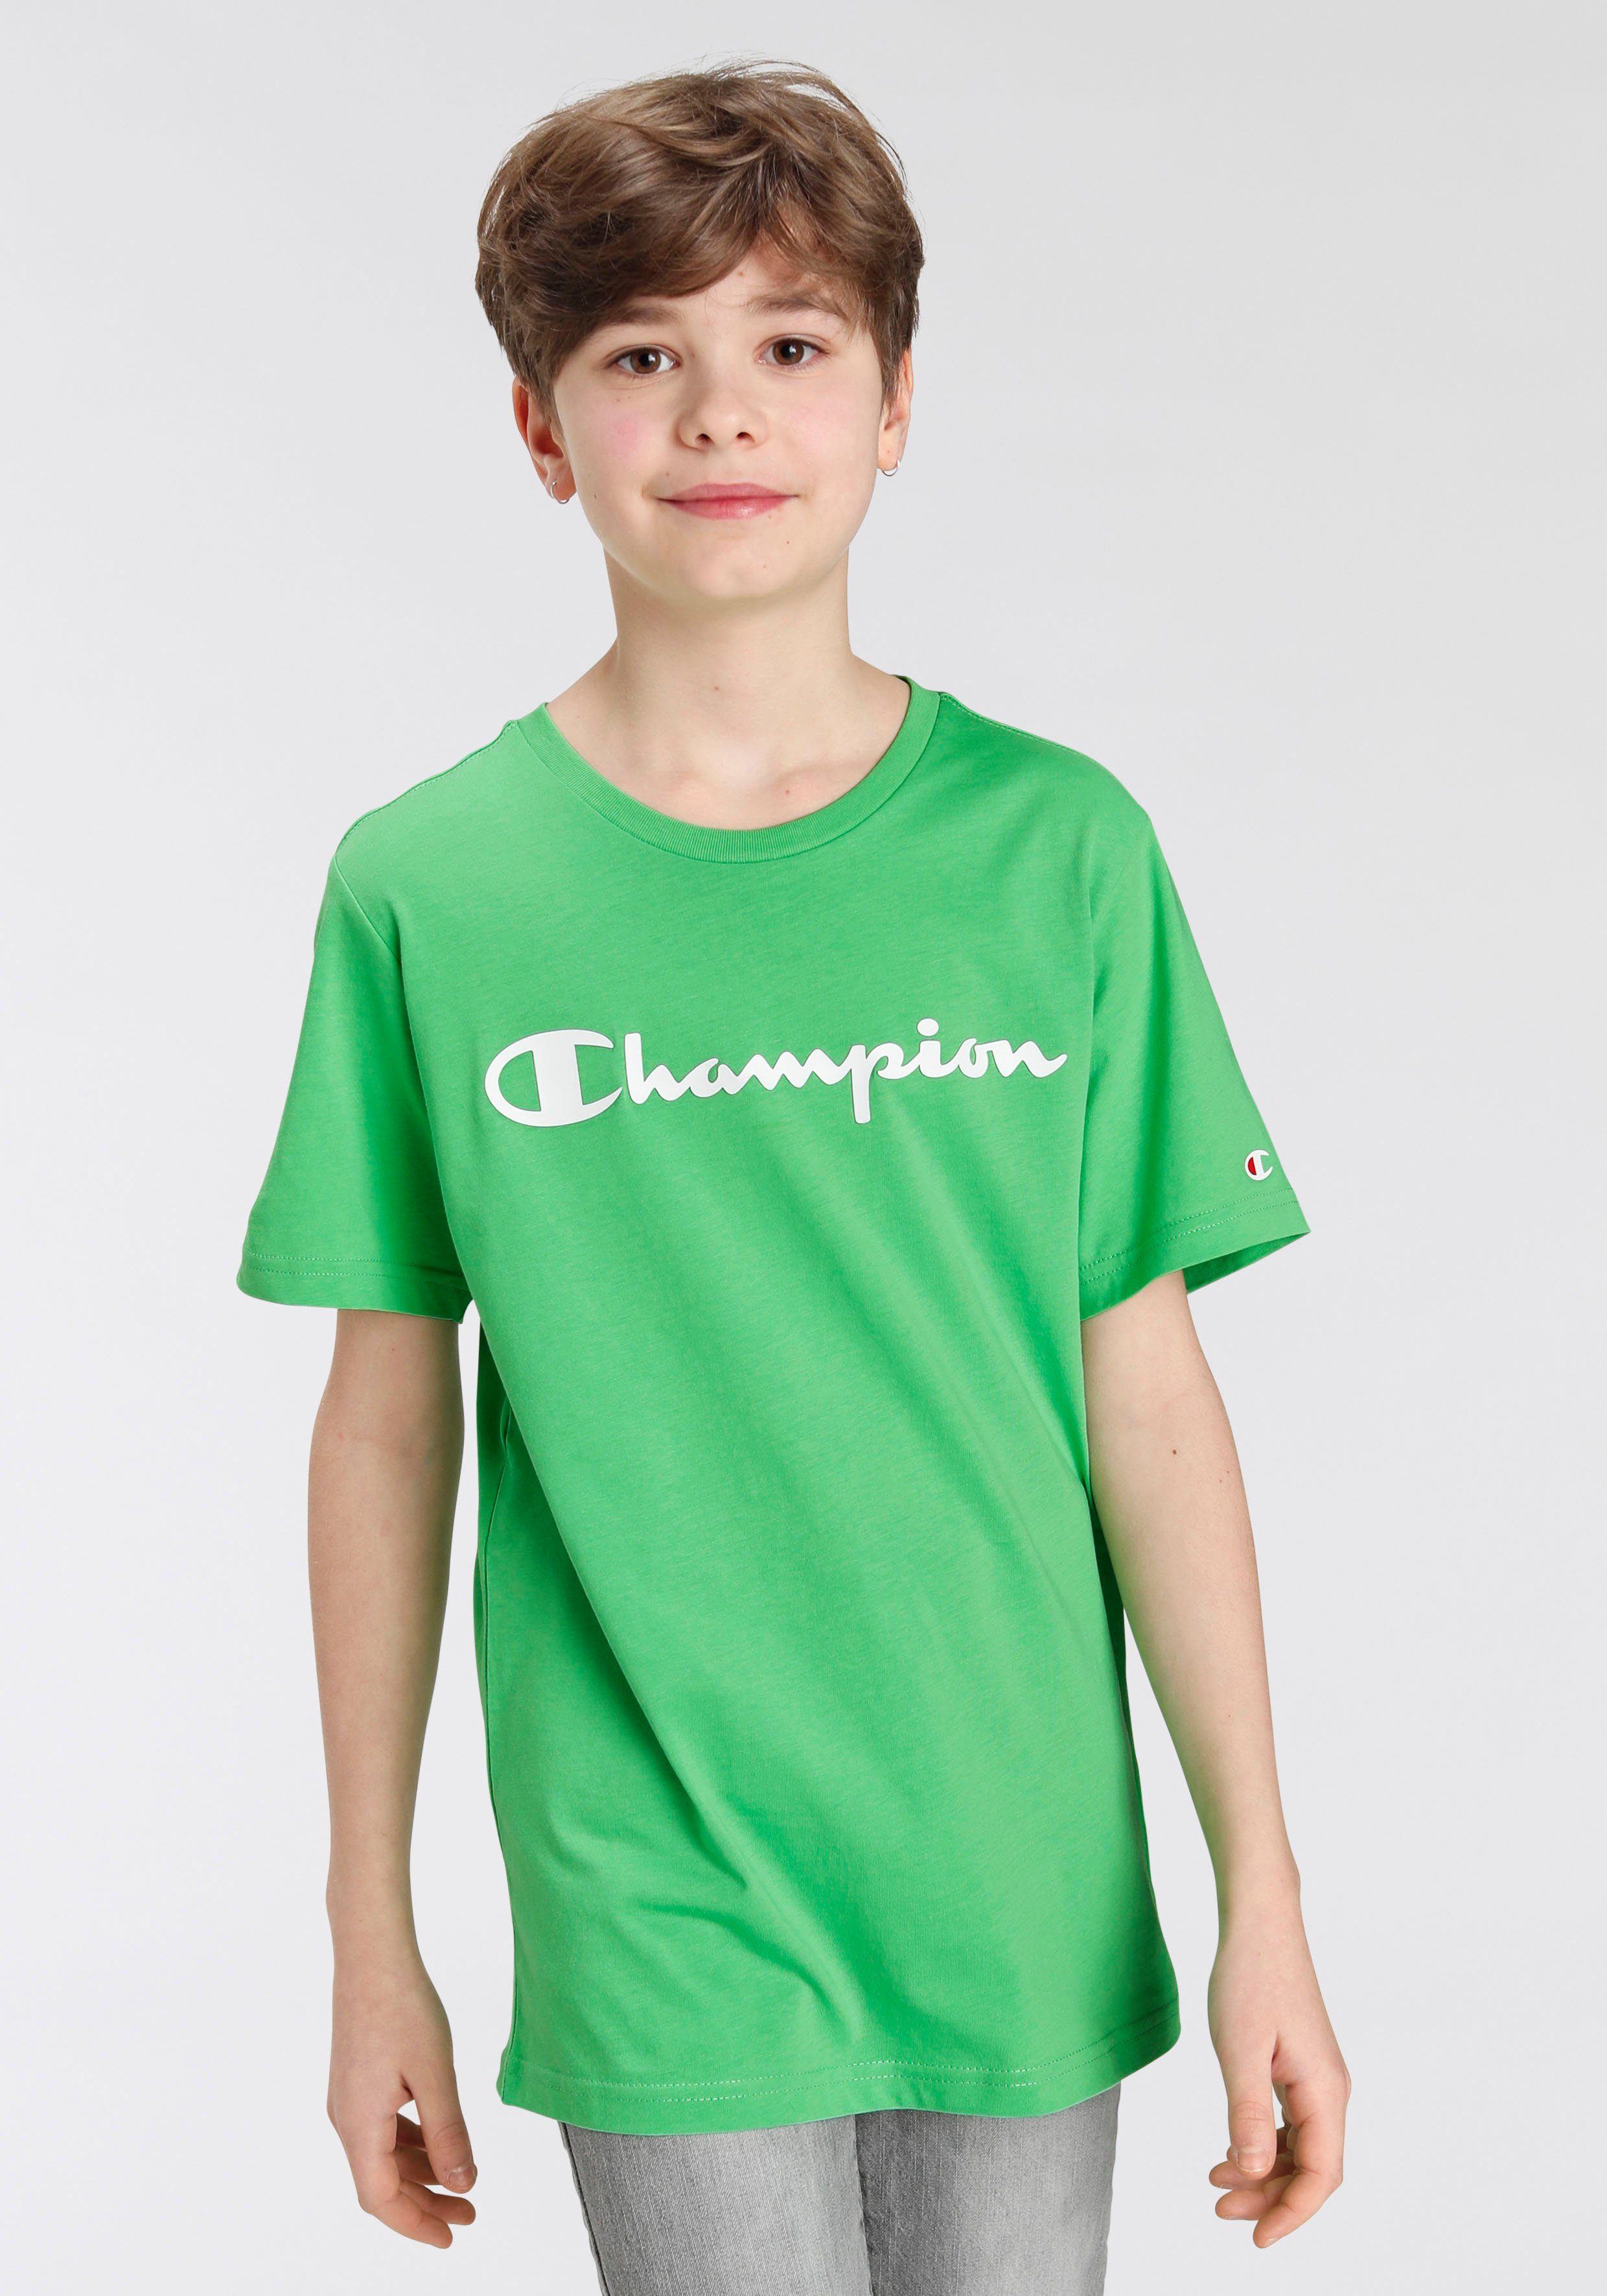 T-Shirt T-Shirt Champion Crewneck grün